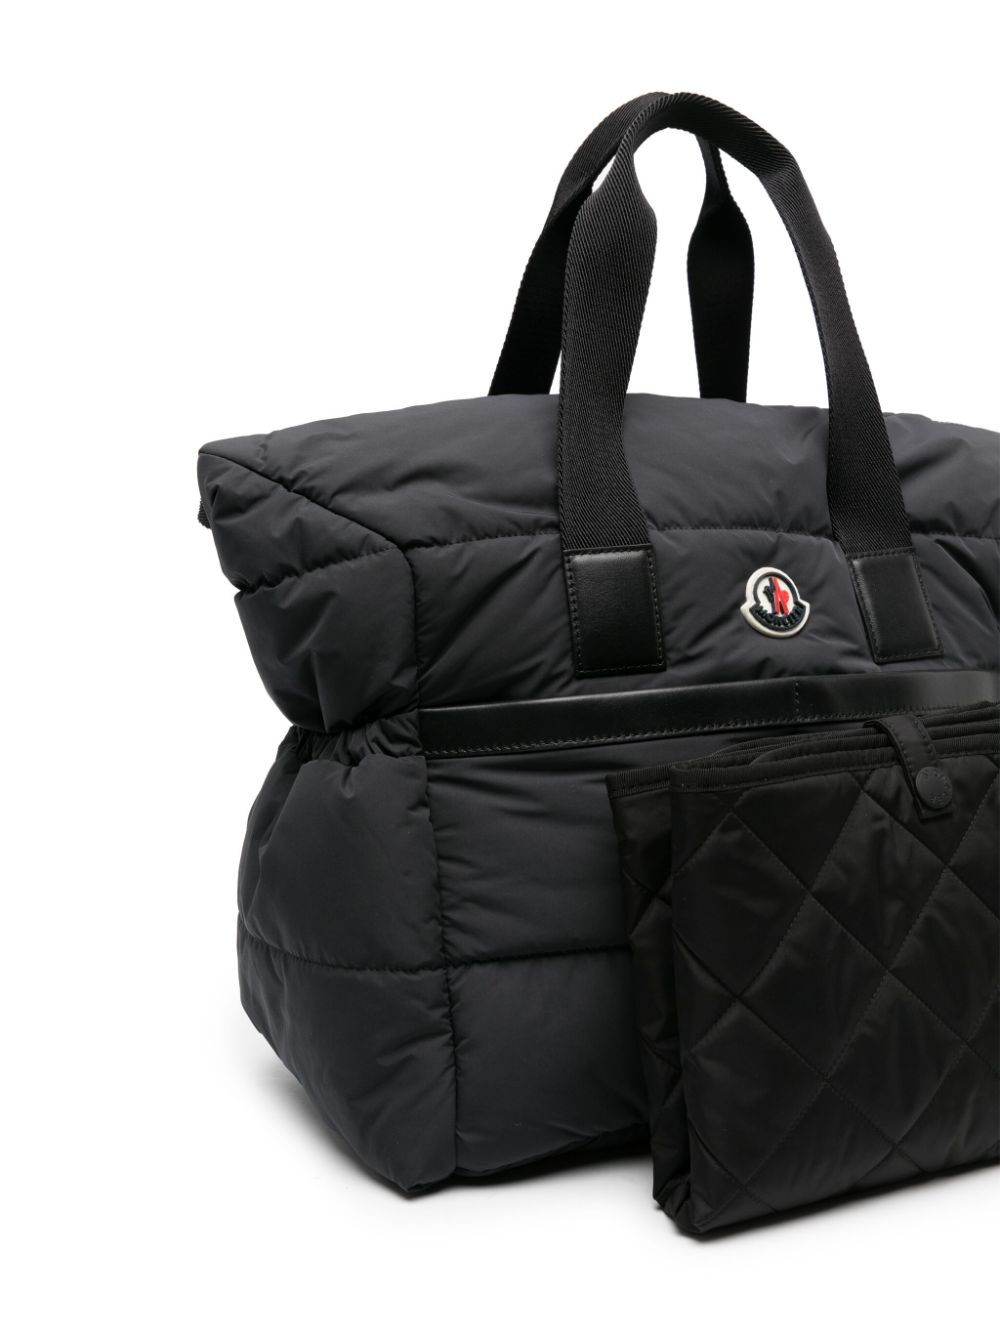 Mother's bag for newborns in black nylon